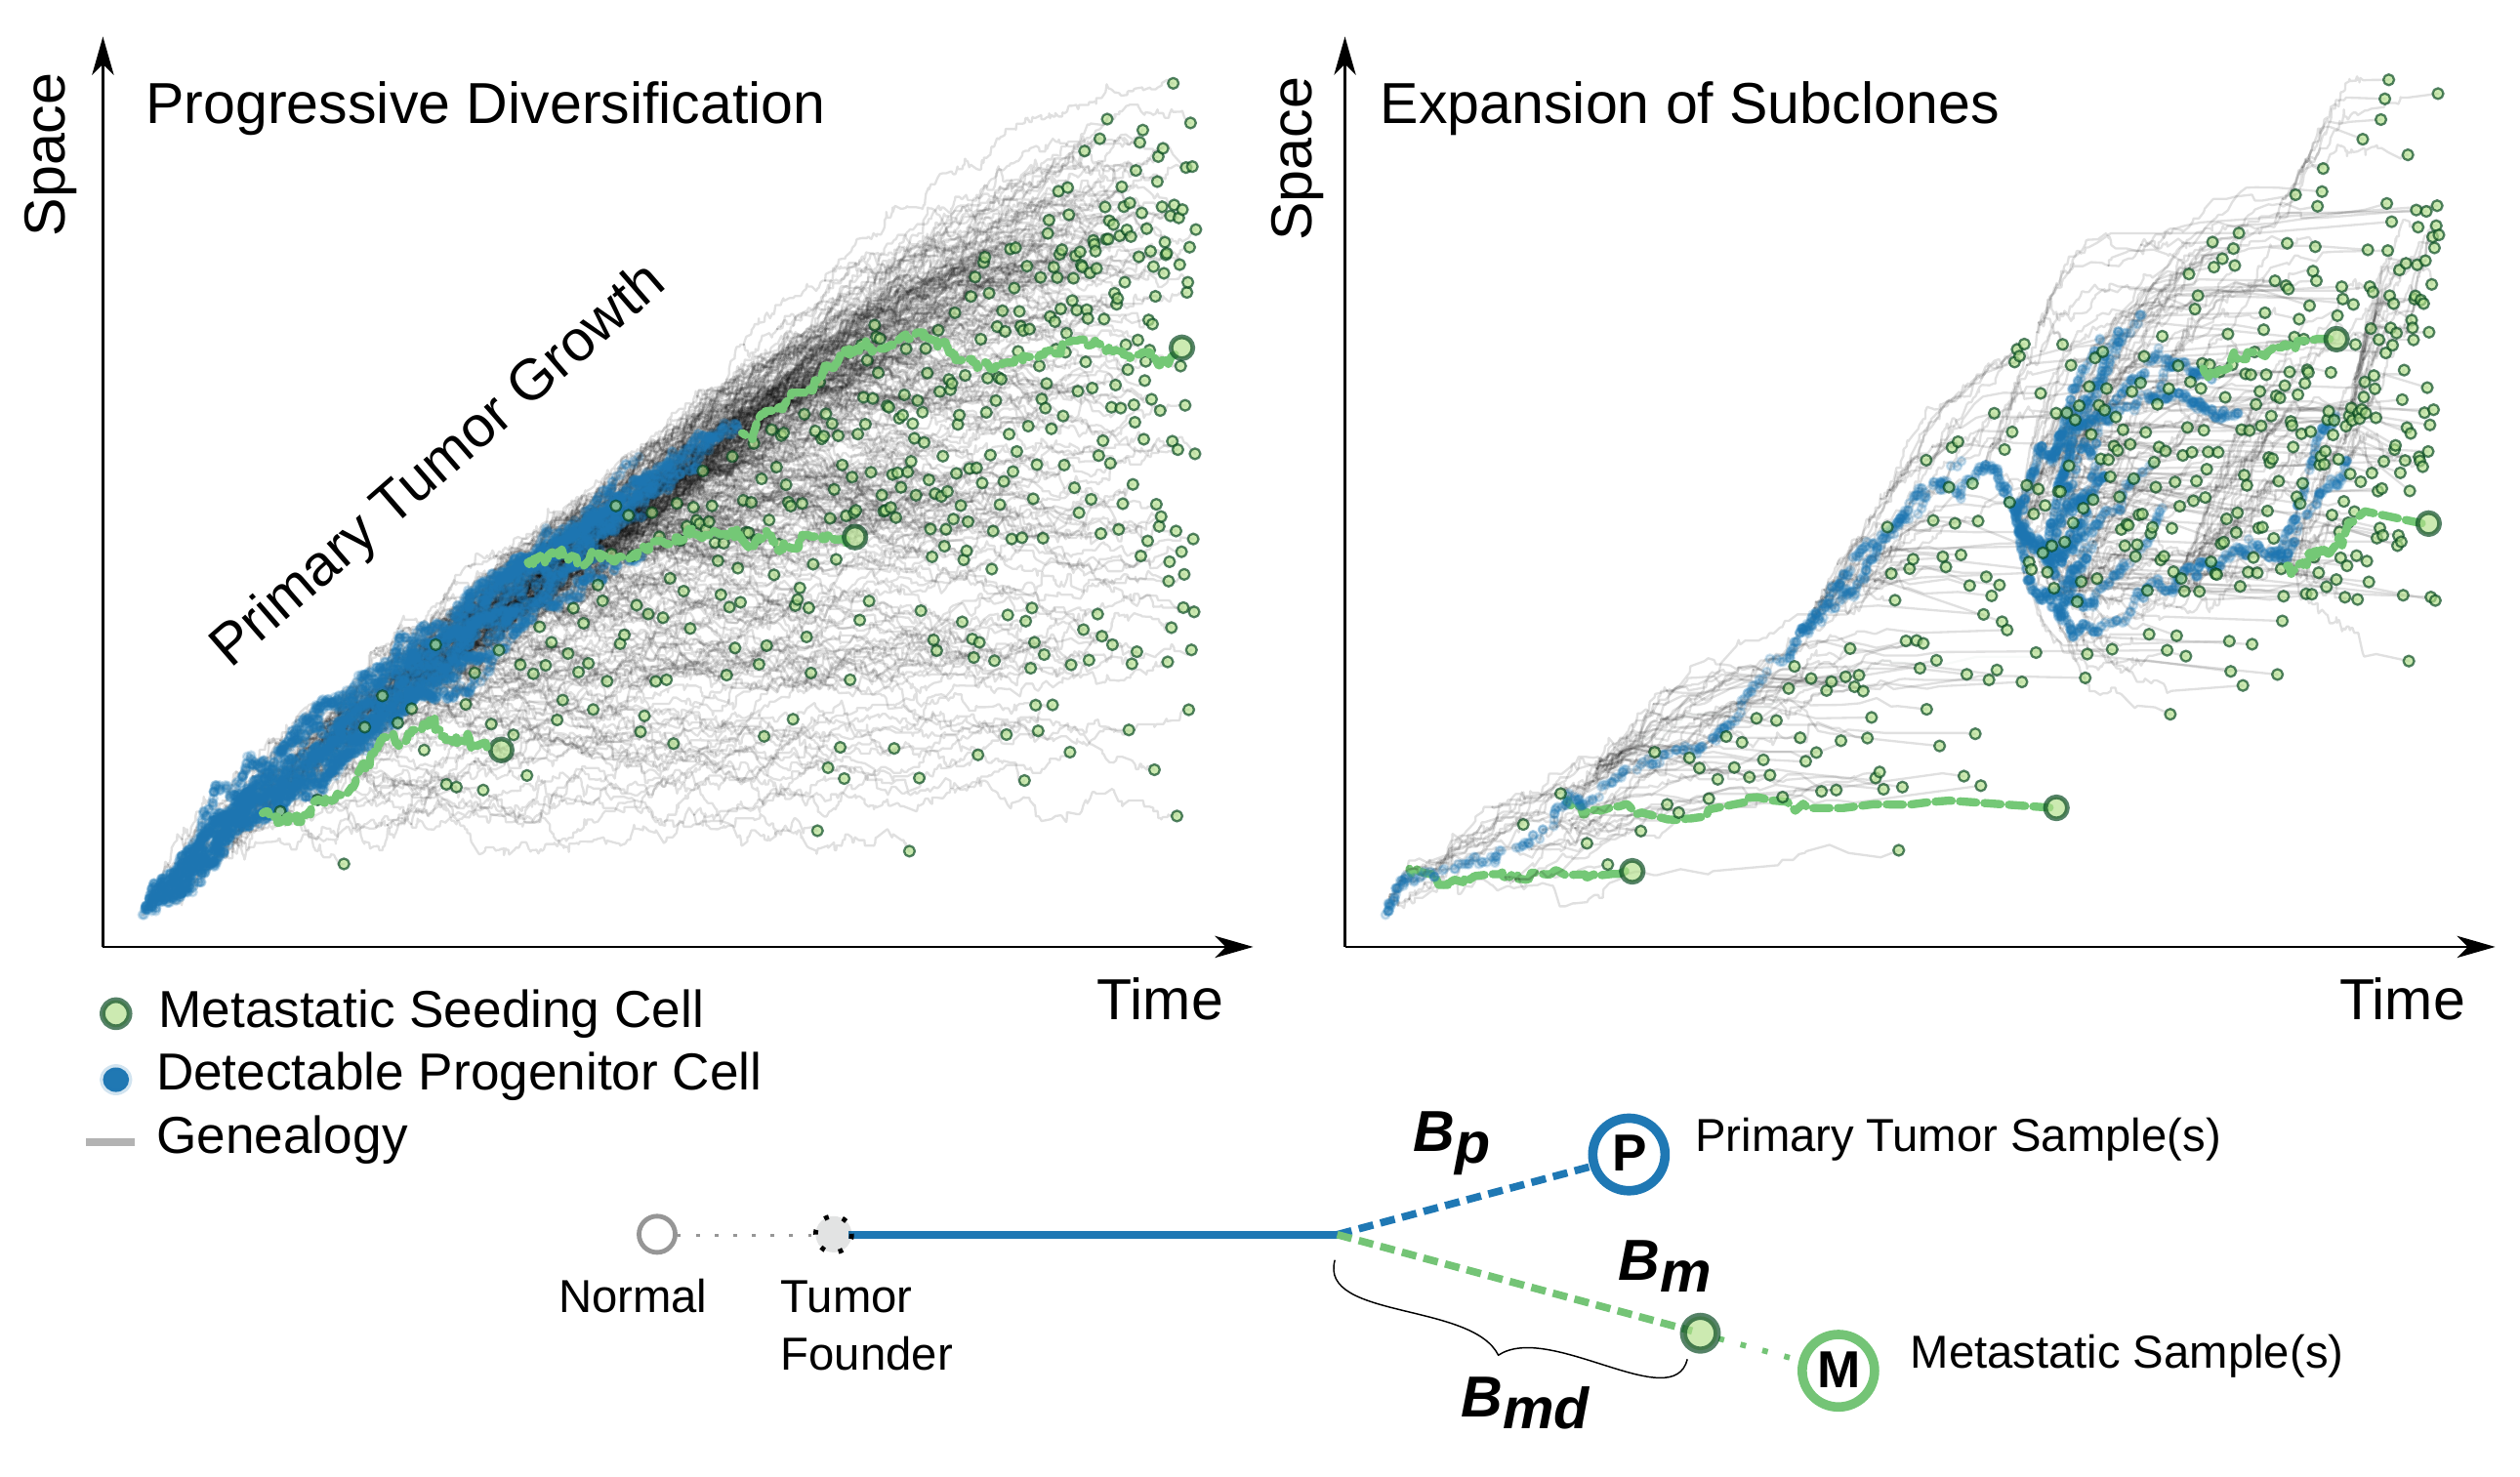 Modeling the between-tumor genomic divergence